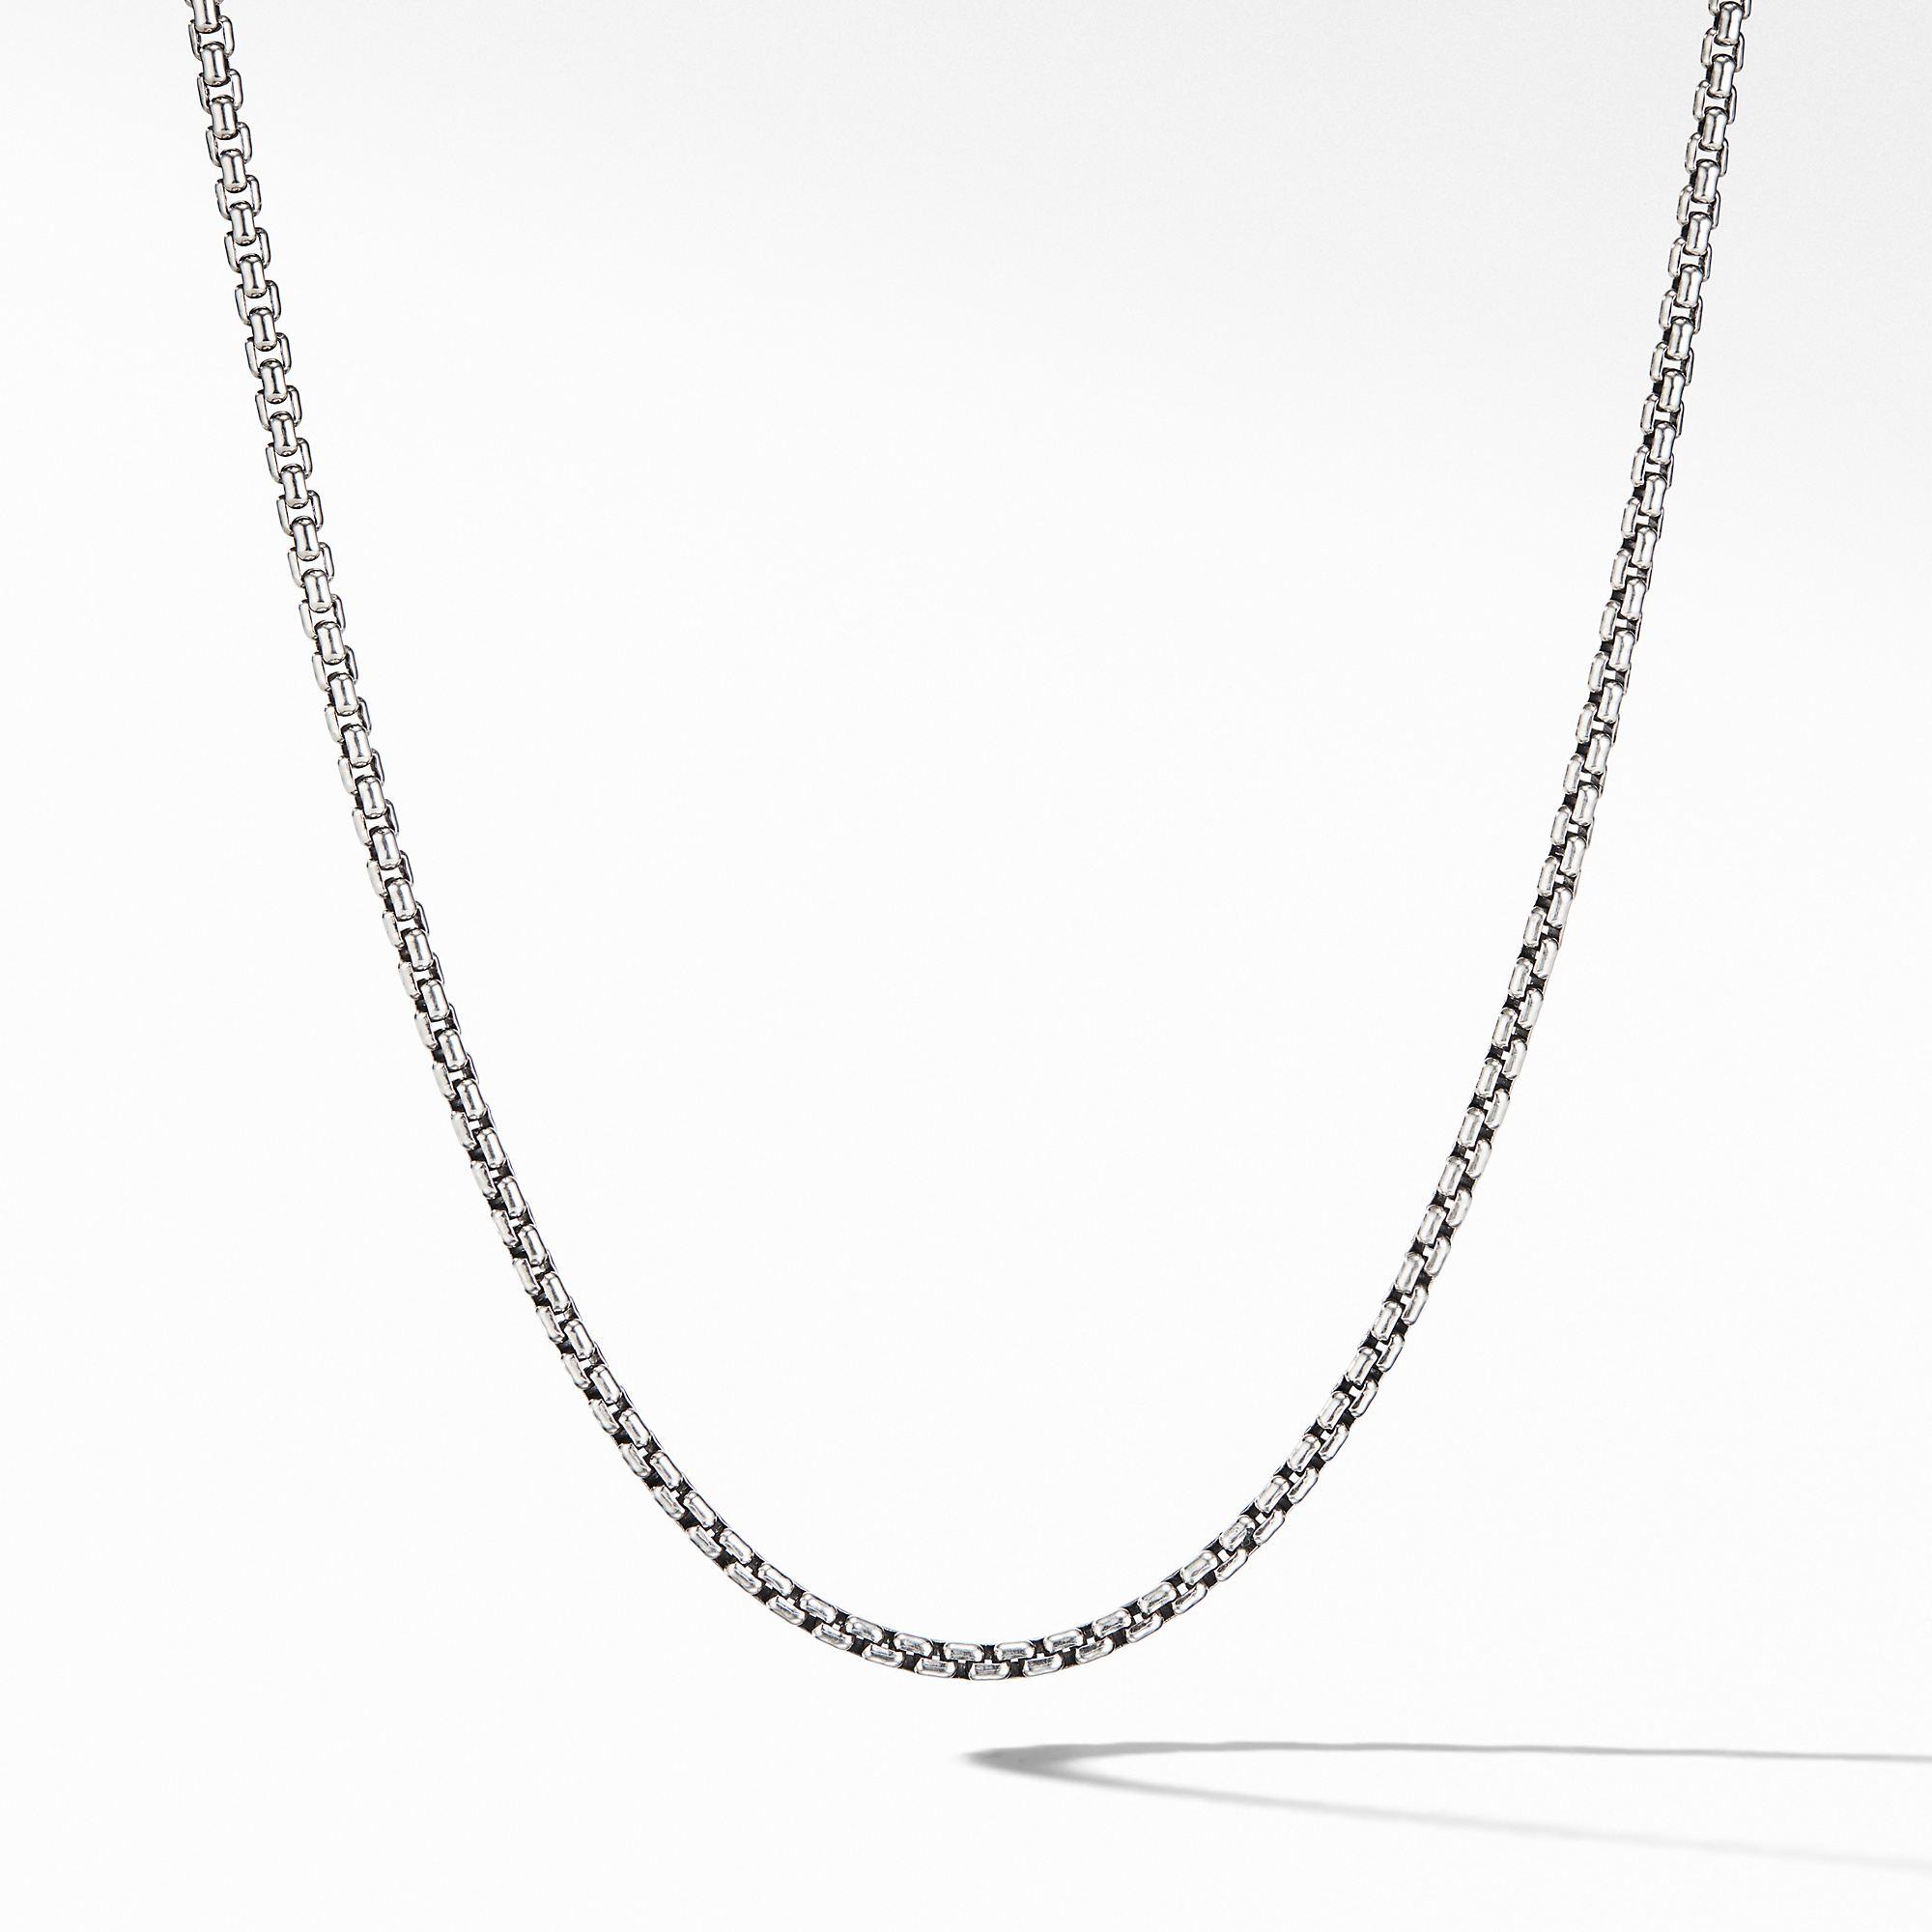 David Yurman Men's small Box Chain Necklace in Sterling Silver, 22 inches